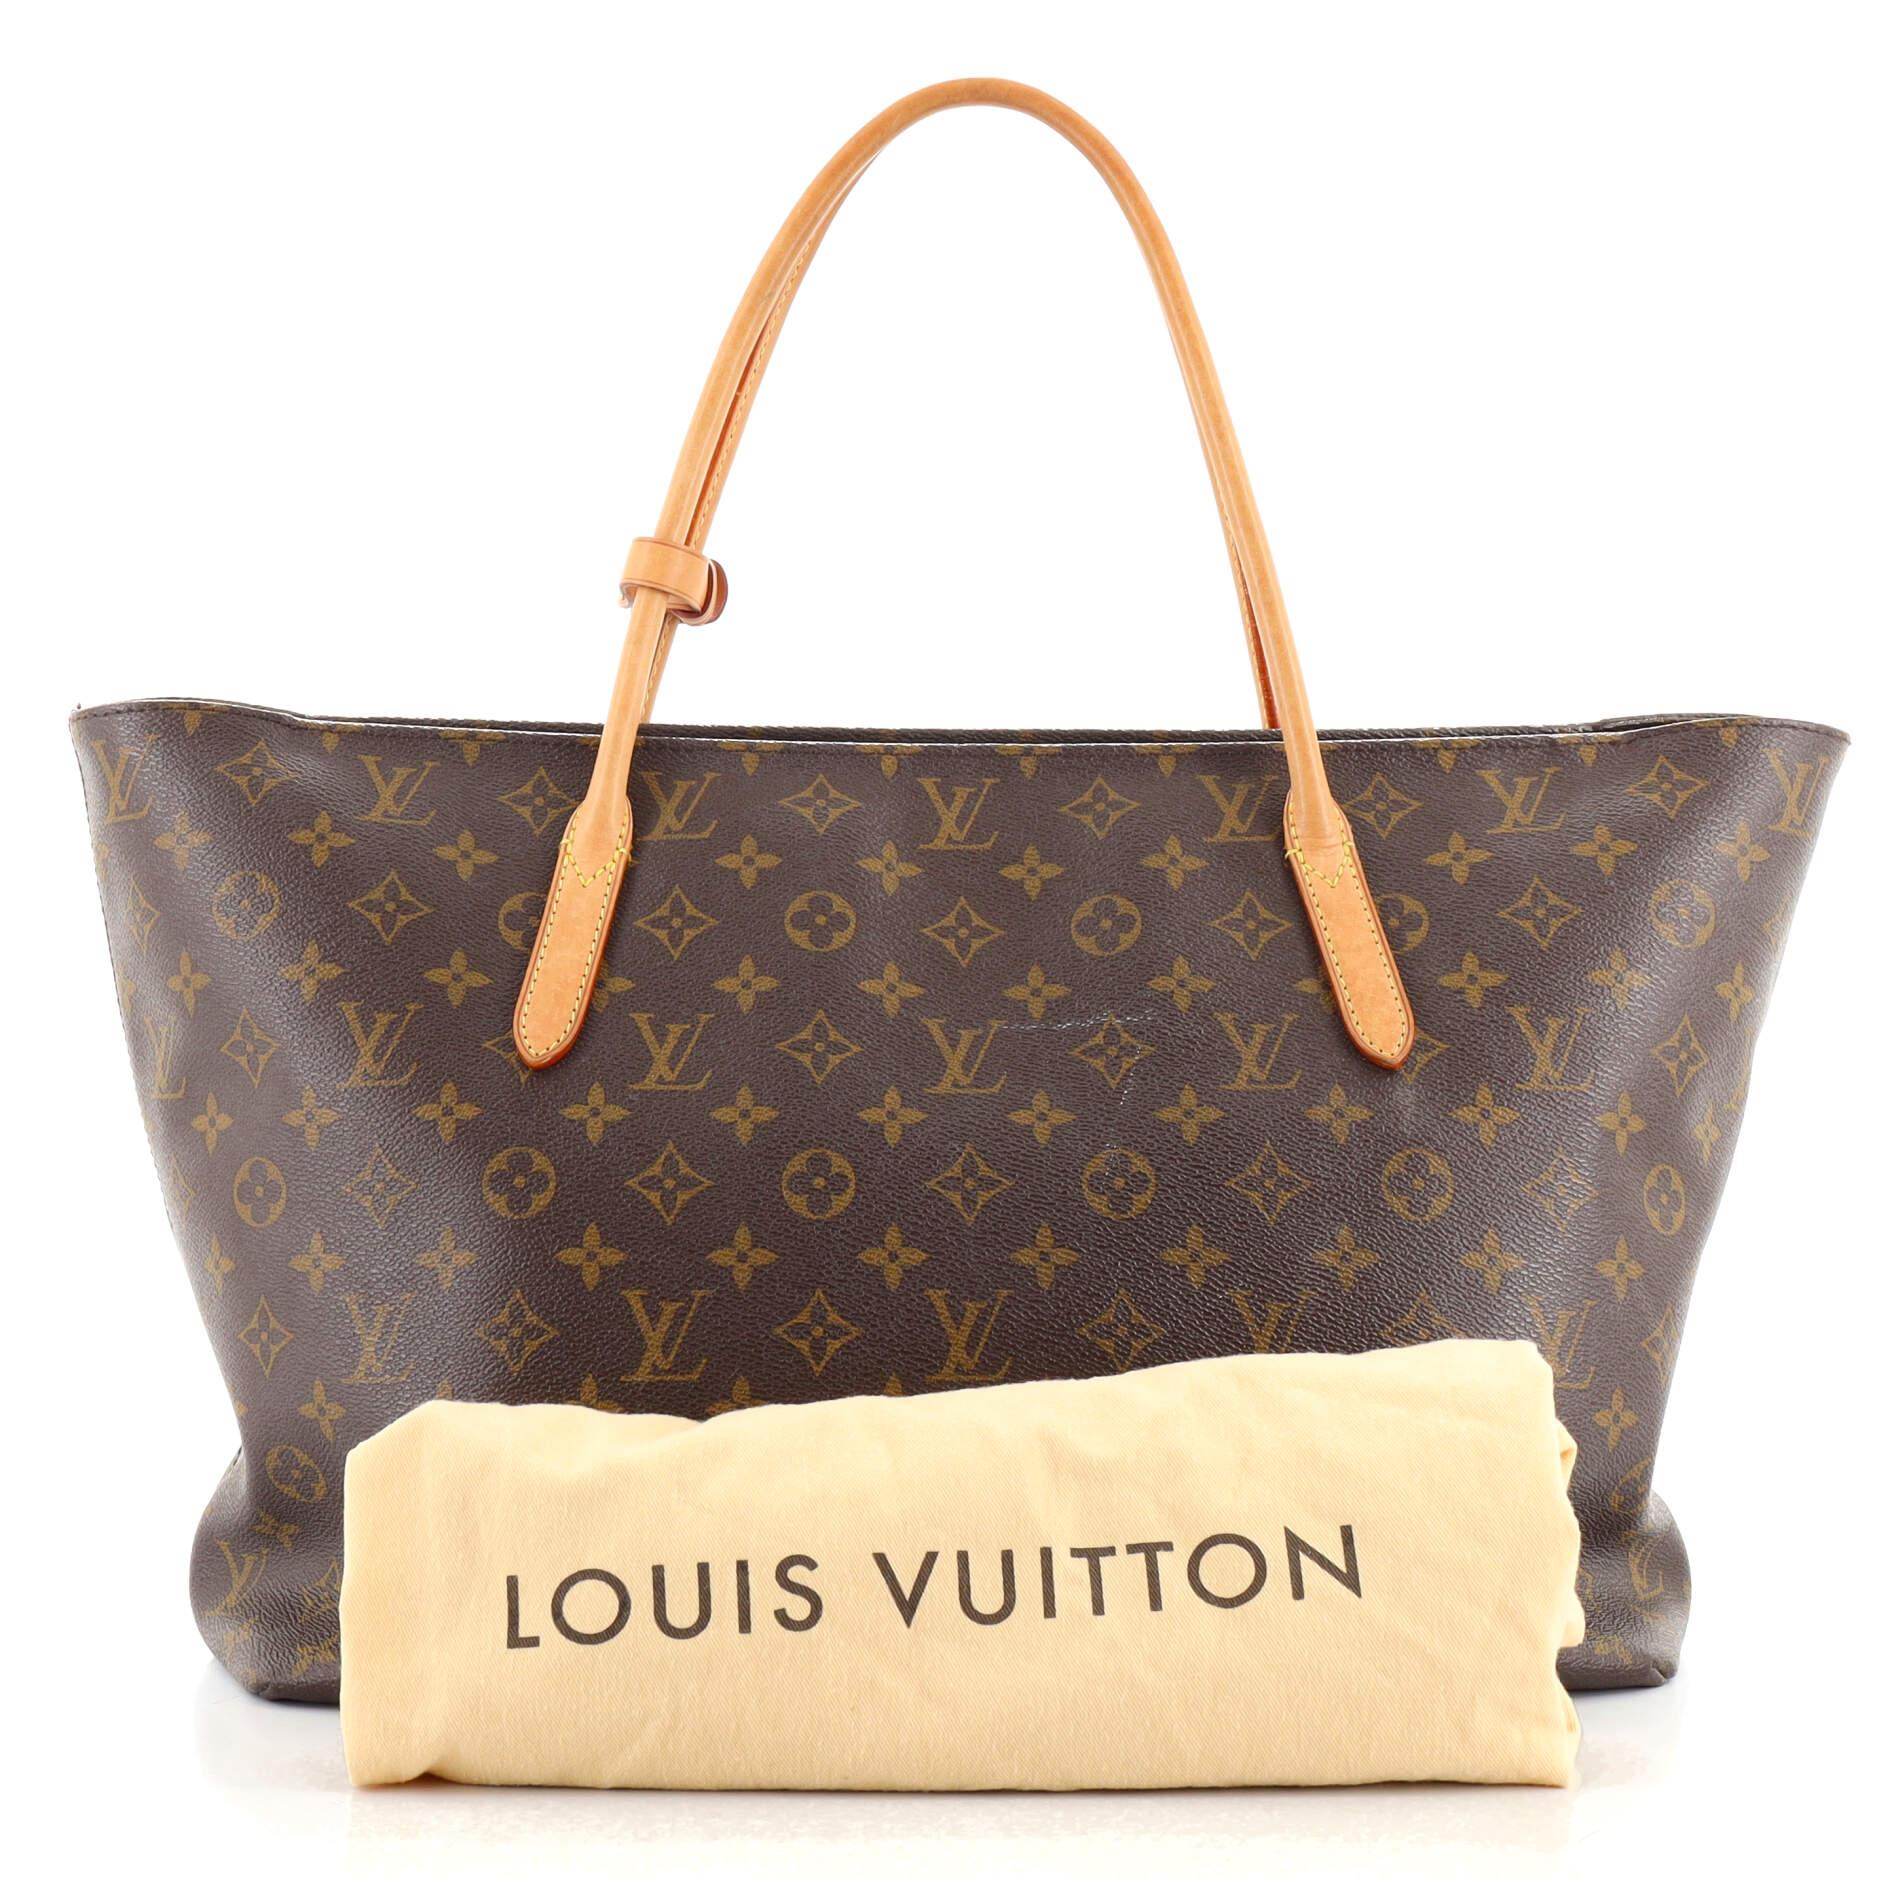 Louis Vuitton Raspail Bag - For Sale on 1stDibs